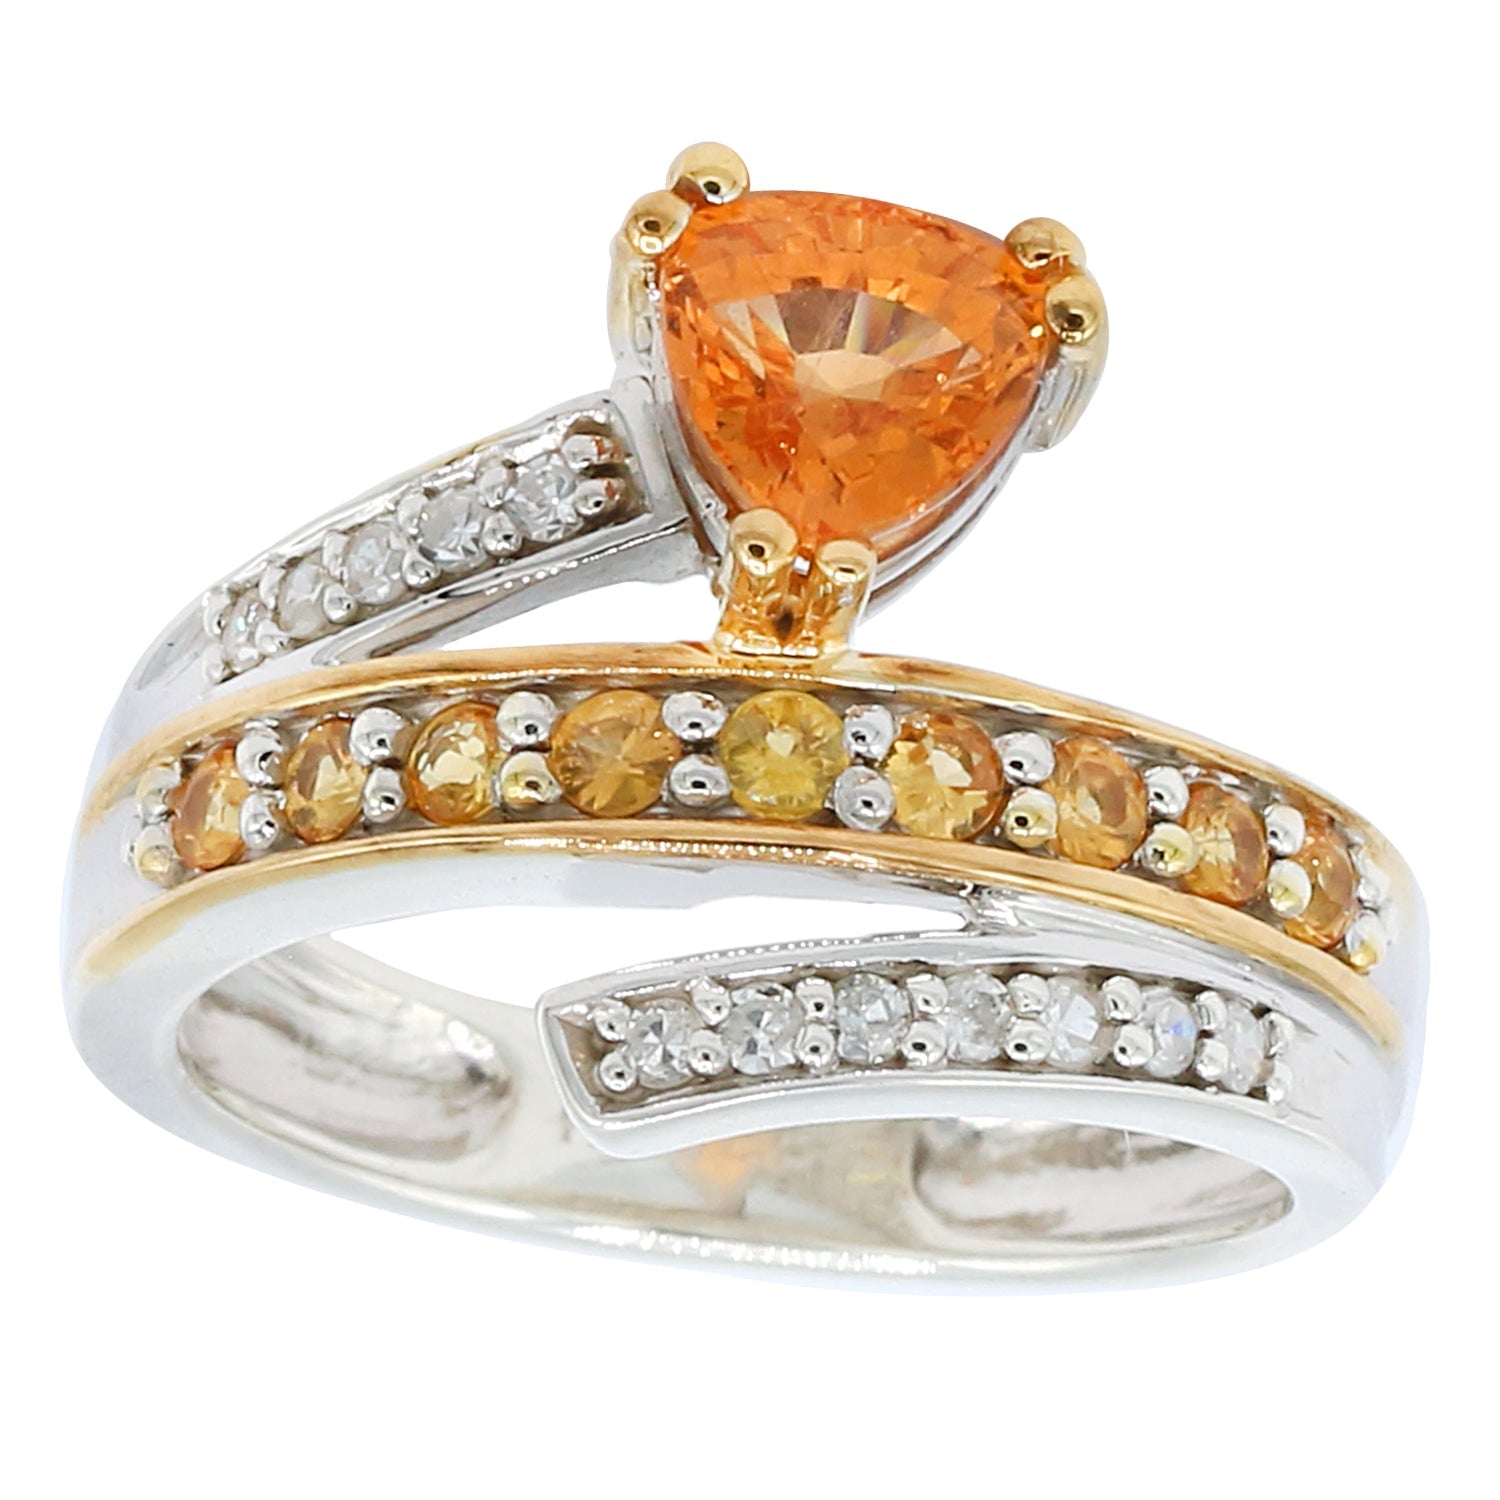 Michael's Originals One-of-a-kind 1.49ctw Trillion Cut Spessartite Garnet Yellow Sapphire & Diamond Ring